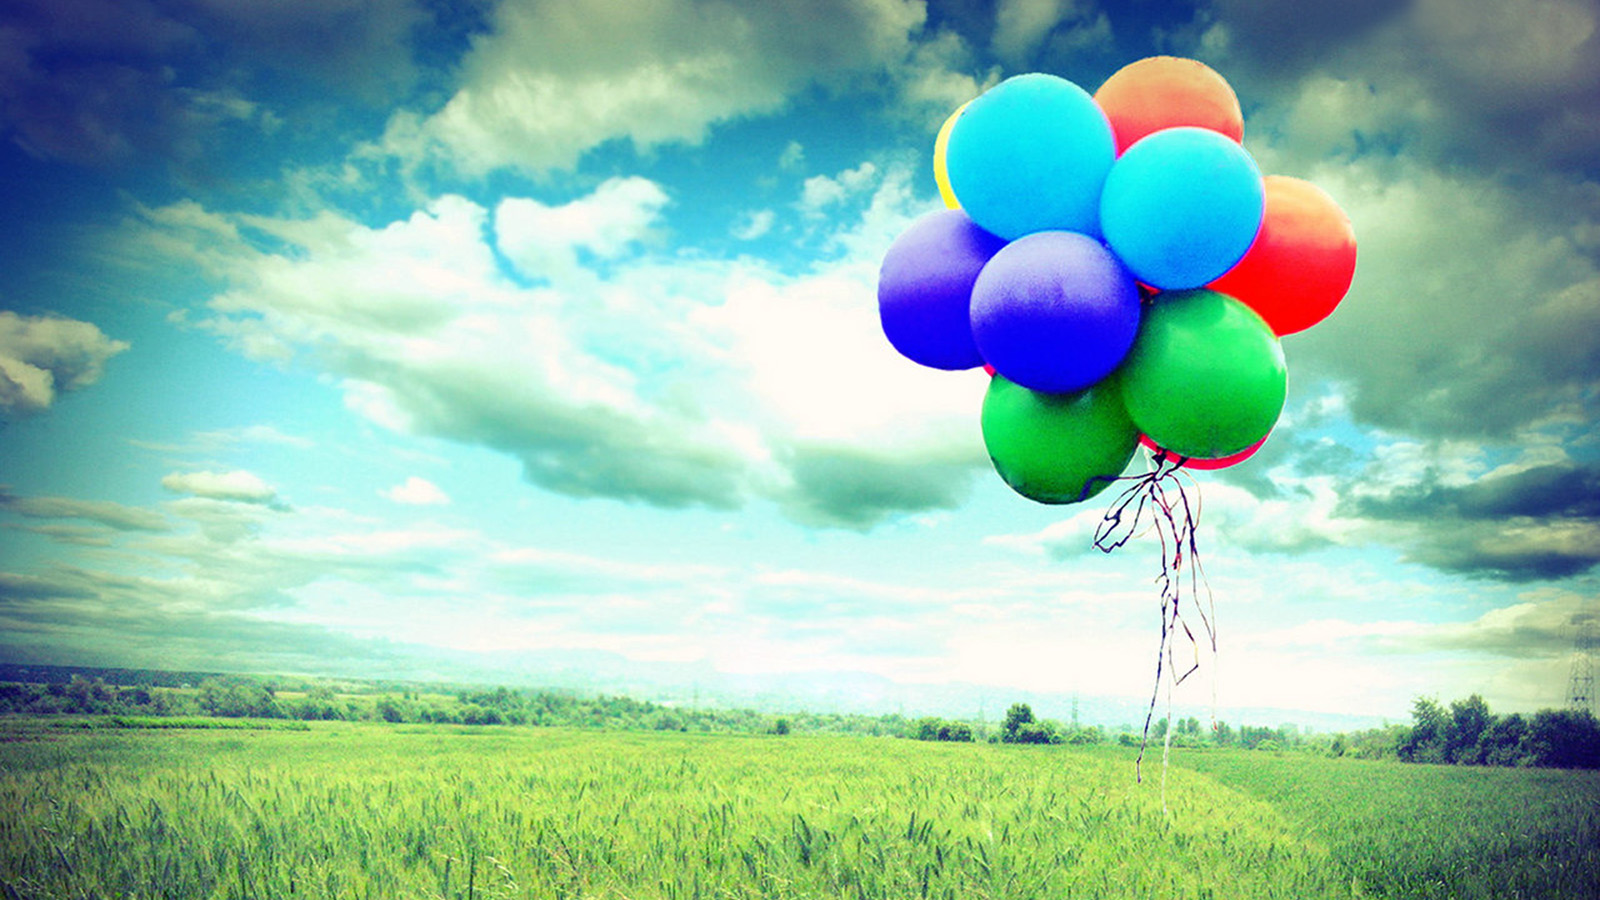 Non-mainstream beautiful colorful balloon desktop wallpaper